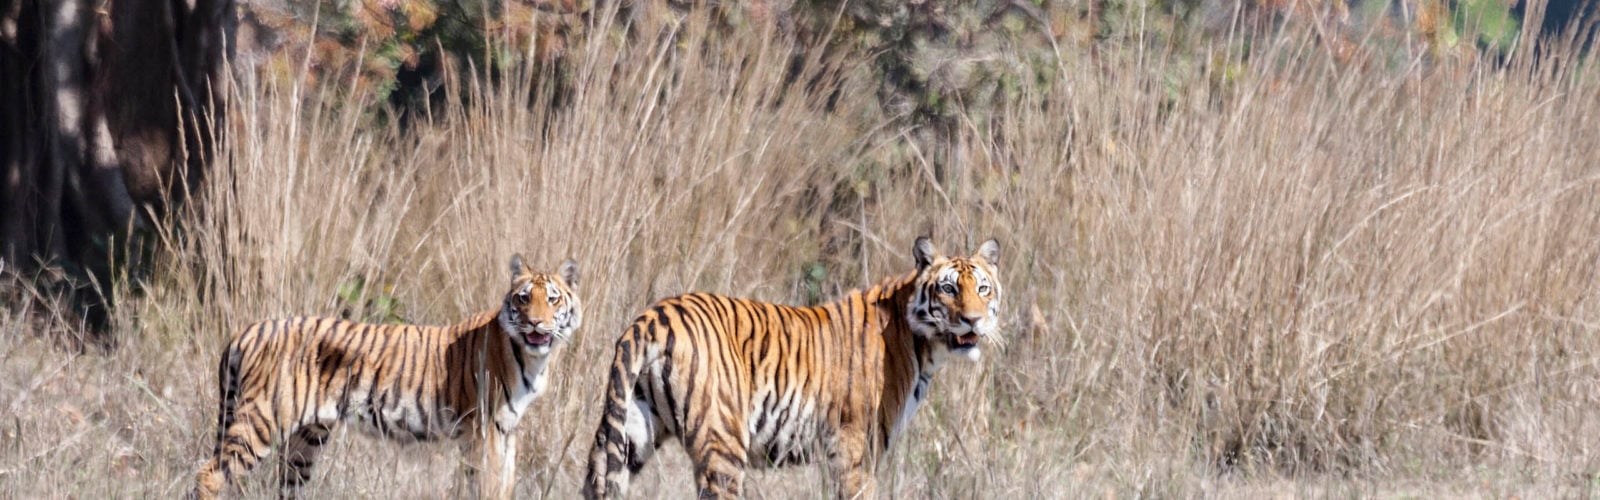 female-tiger-and-cub-kanha-india